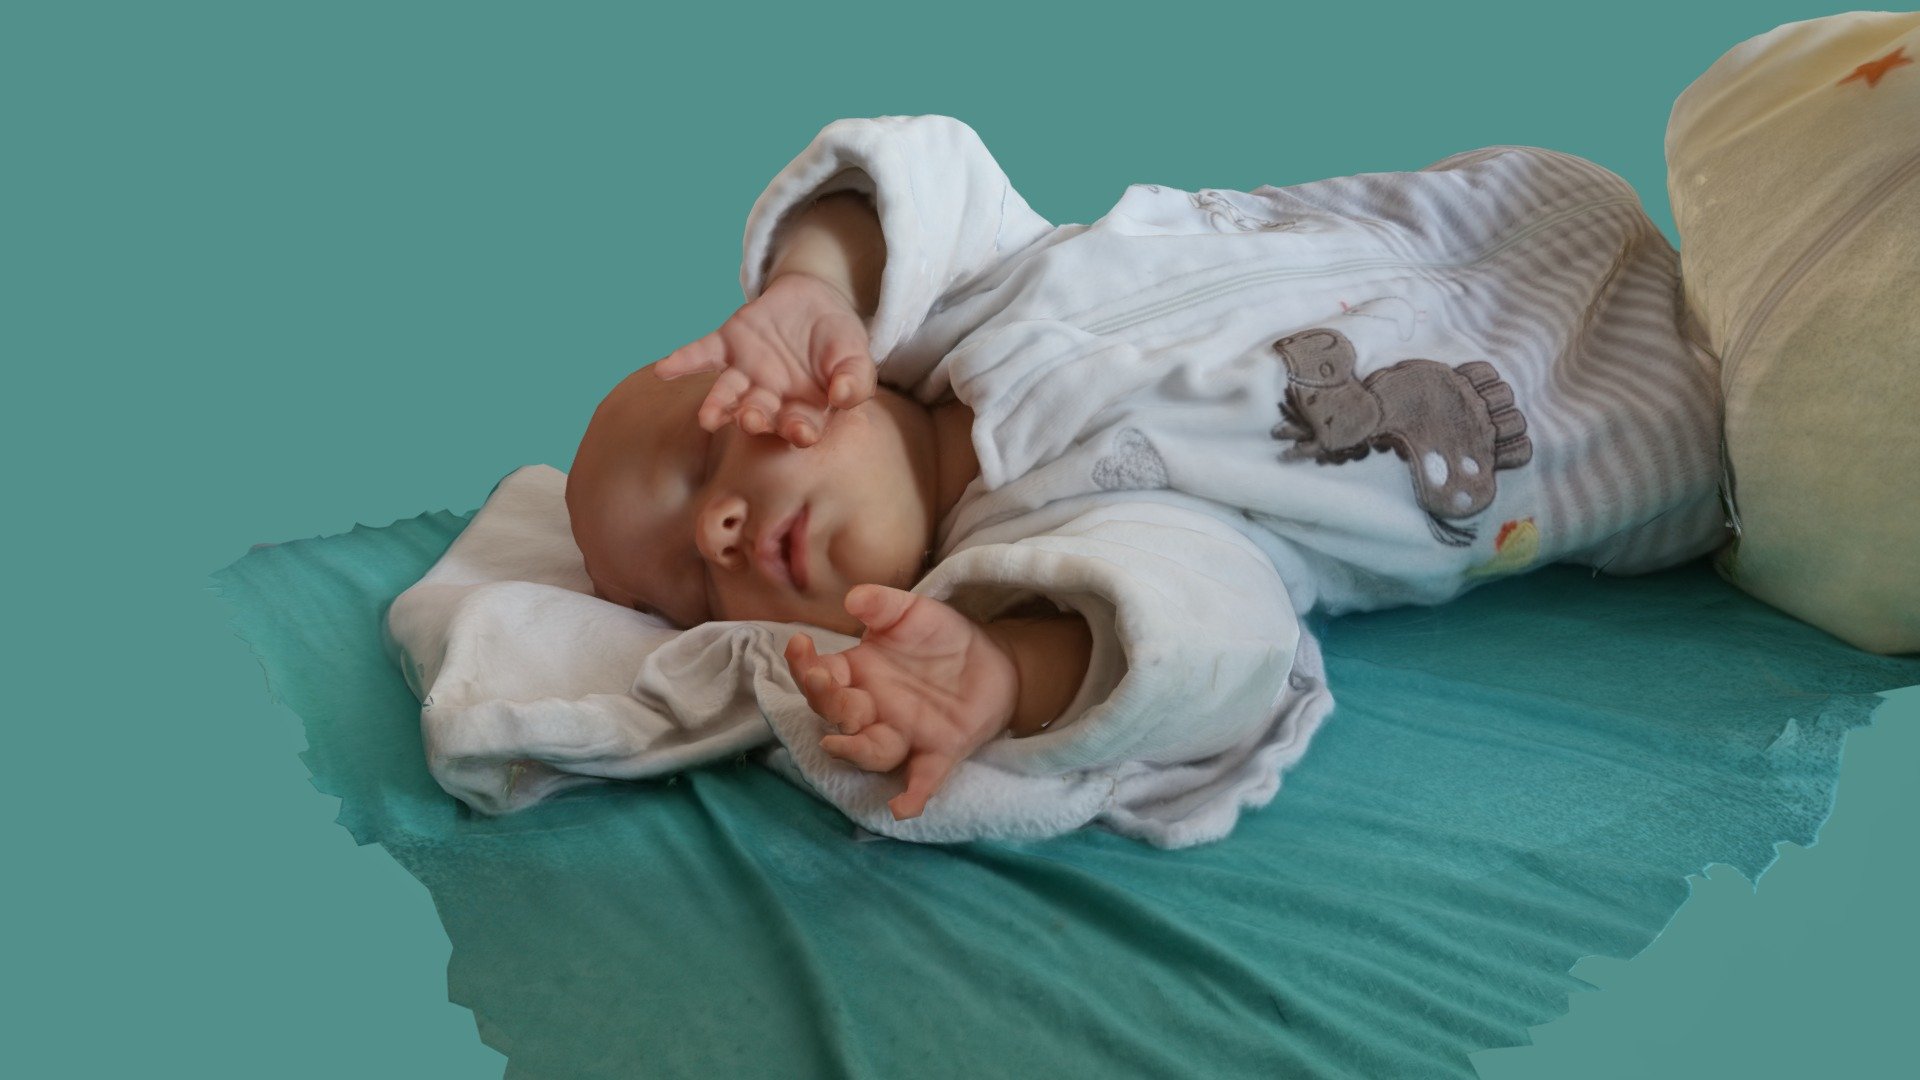 8 weeks old baby photogrammetry 3d model